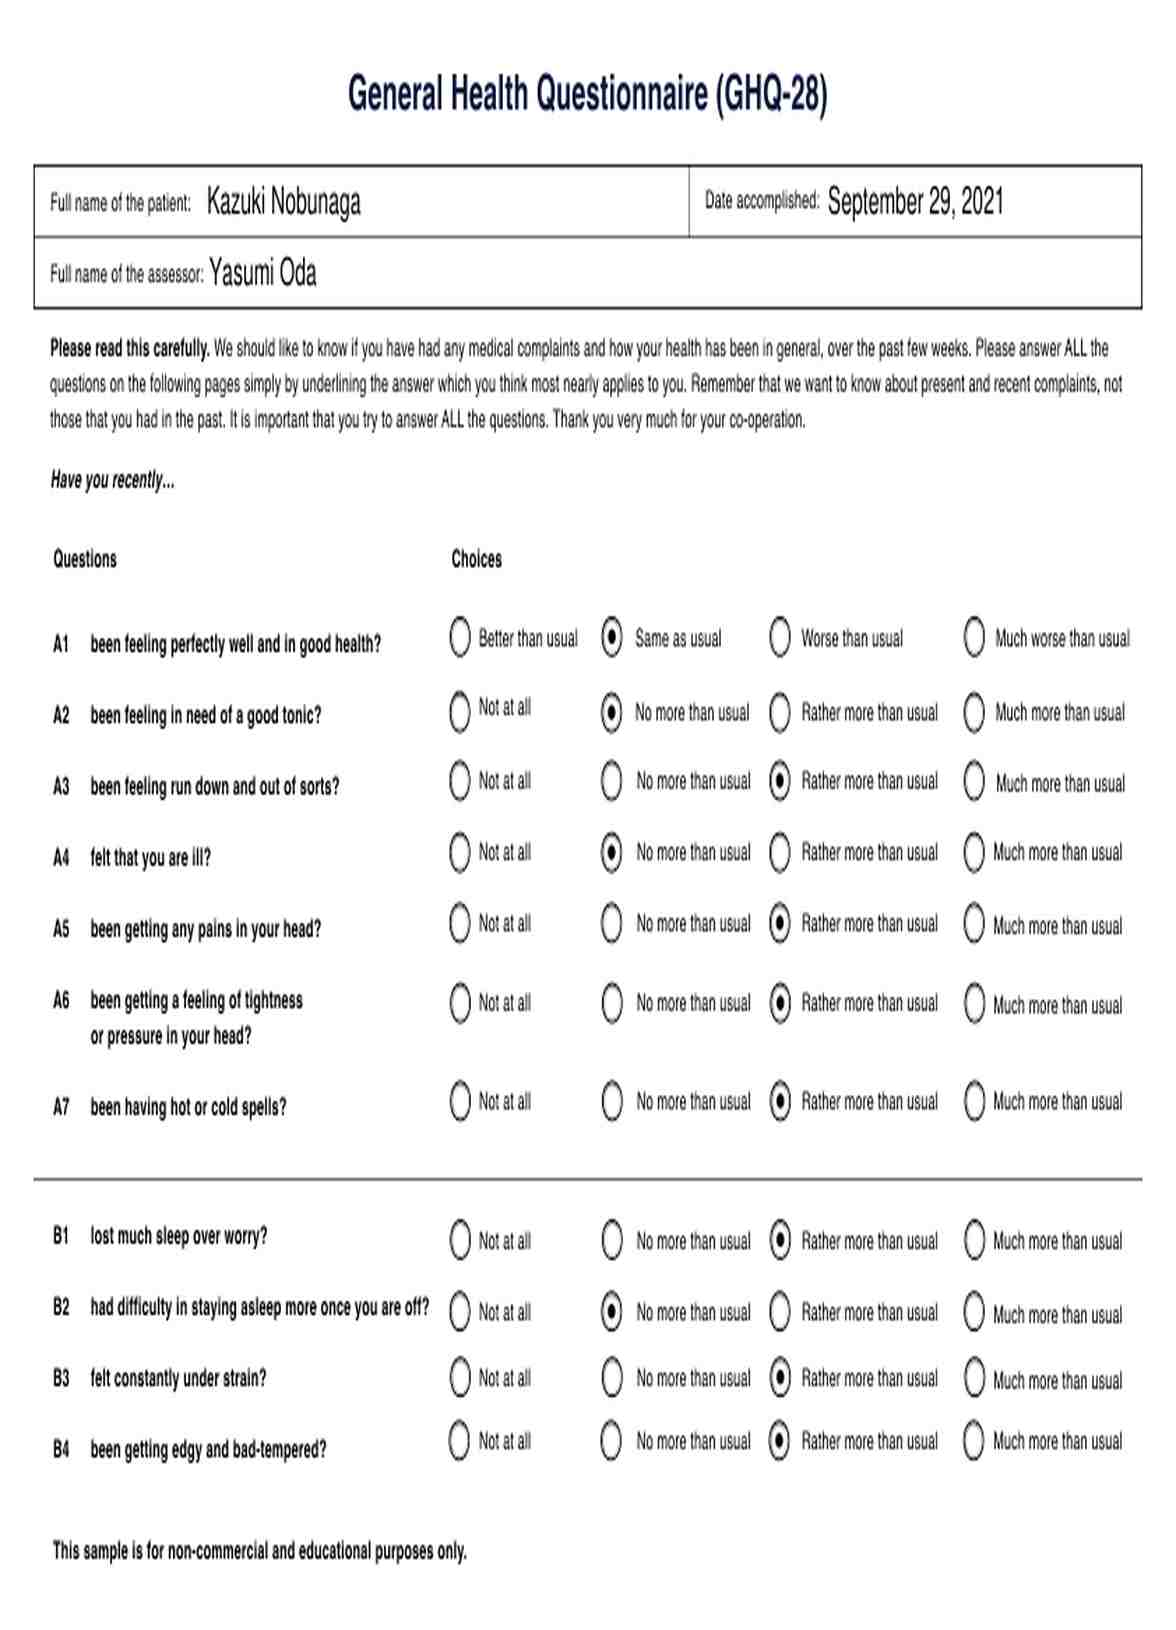 General Health Questionnaire (GHQ-28) PDF Example